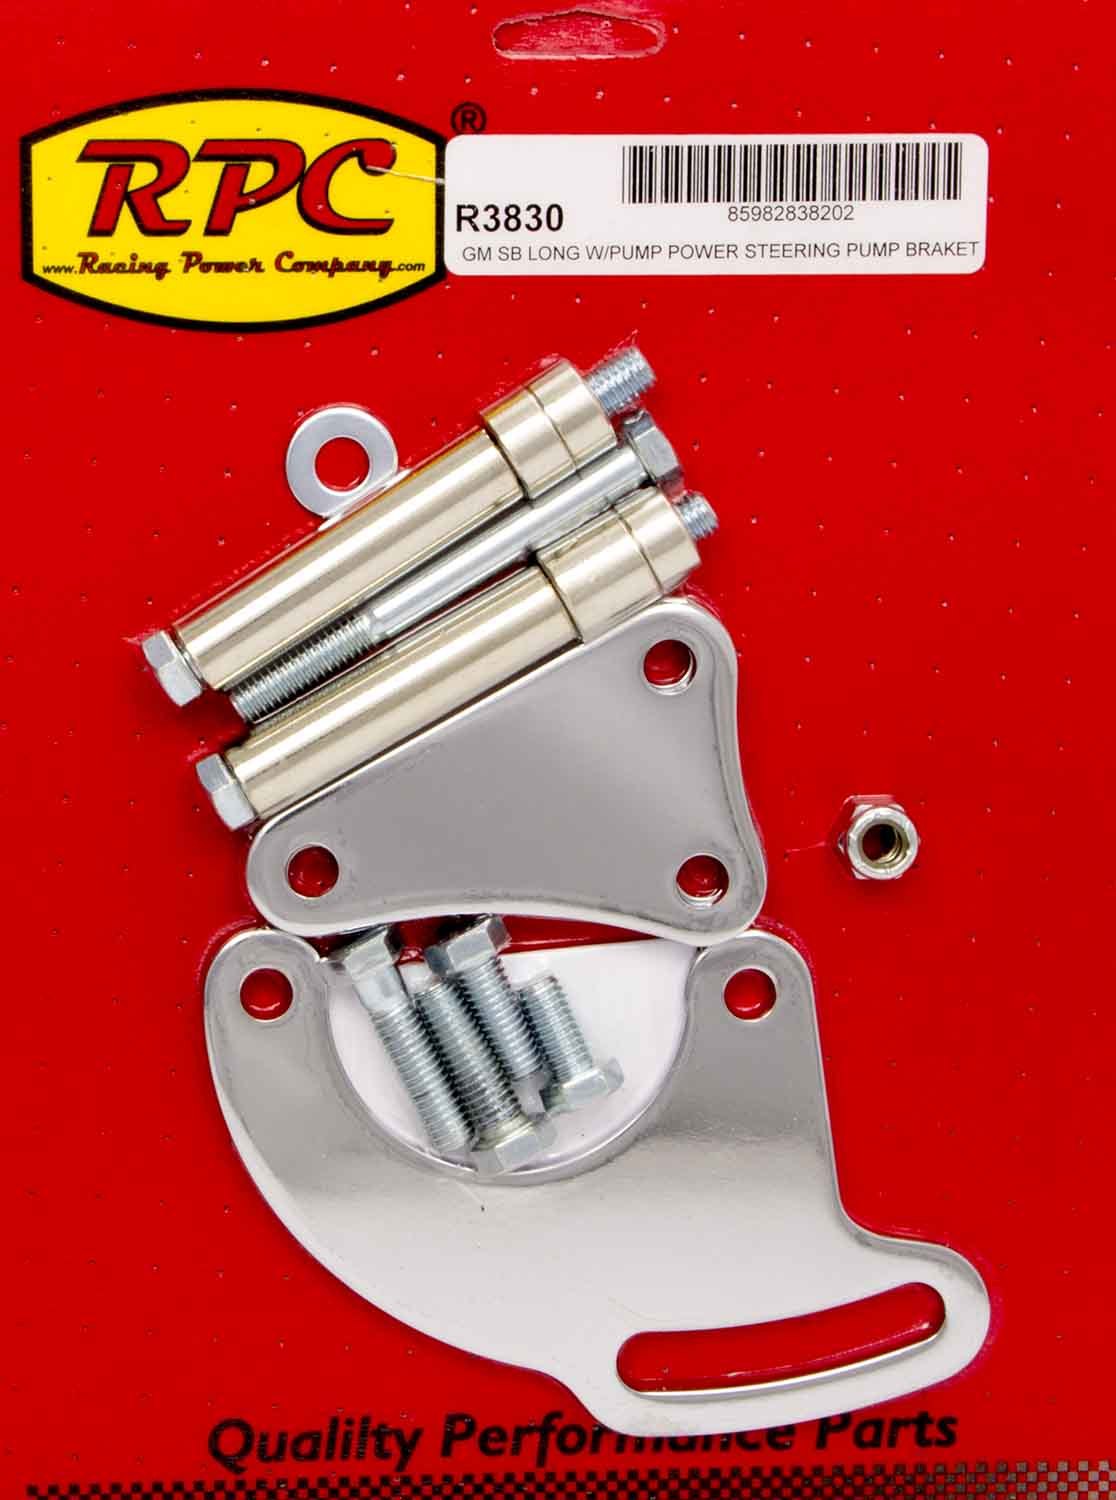 Racing Power Company R3830 Power Steering Pump Bracket, Driver Side, Block Mount, Steel, Chrome, Long Water Pump, Small Block Chevy, Kit